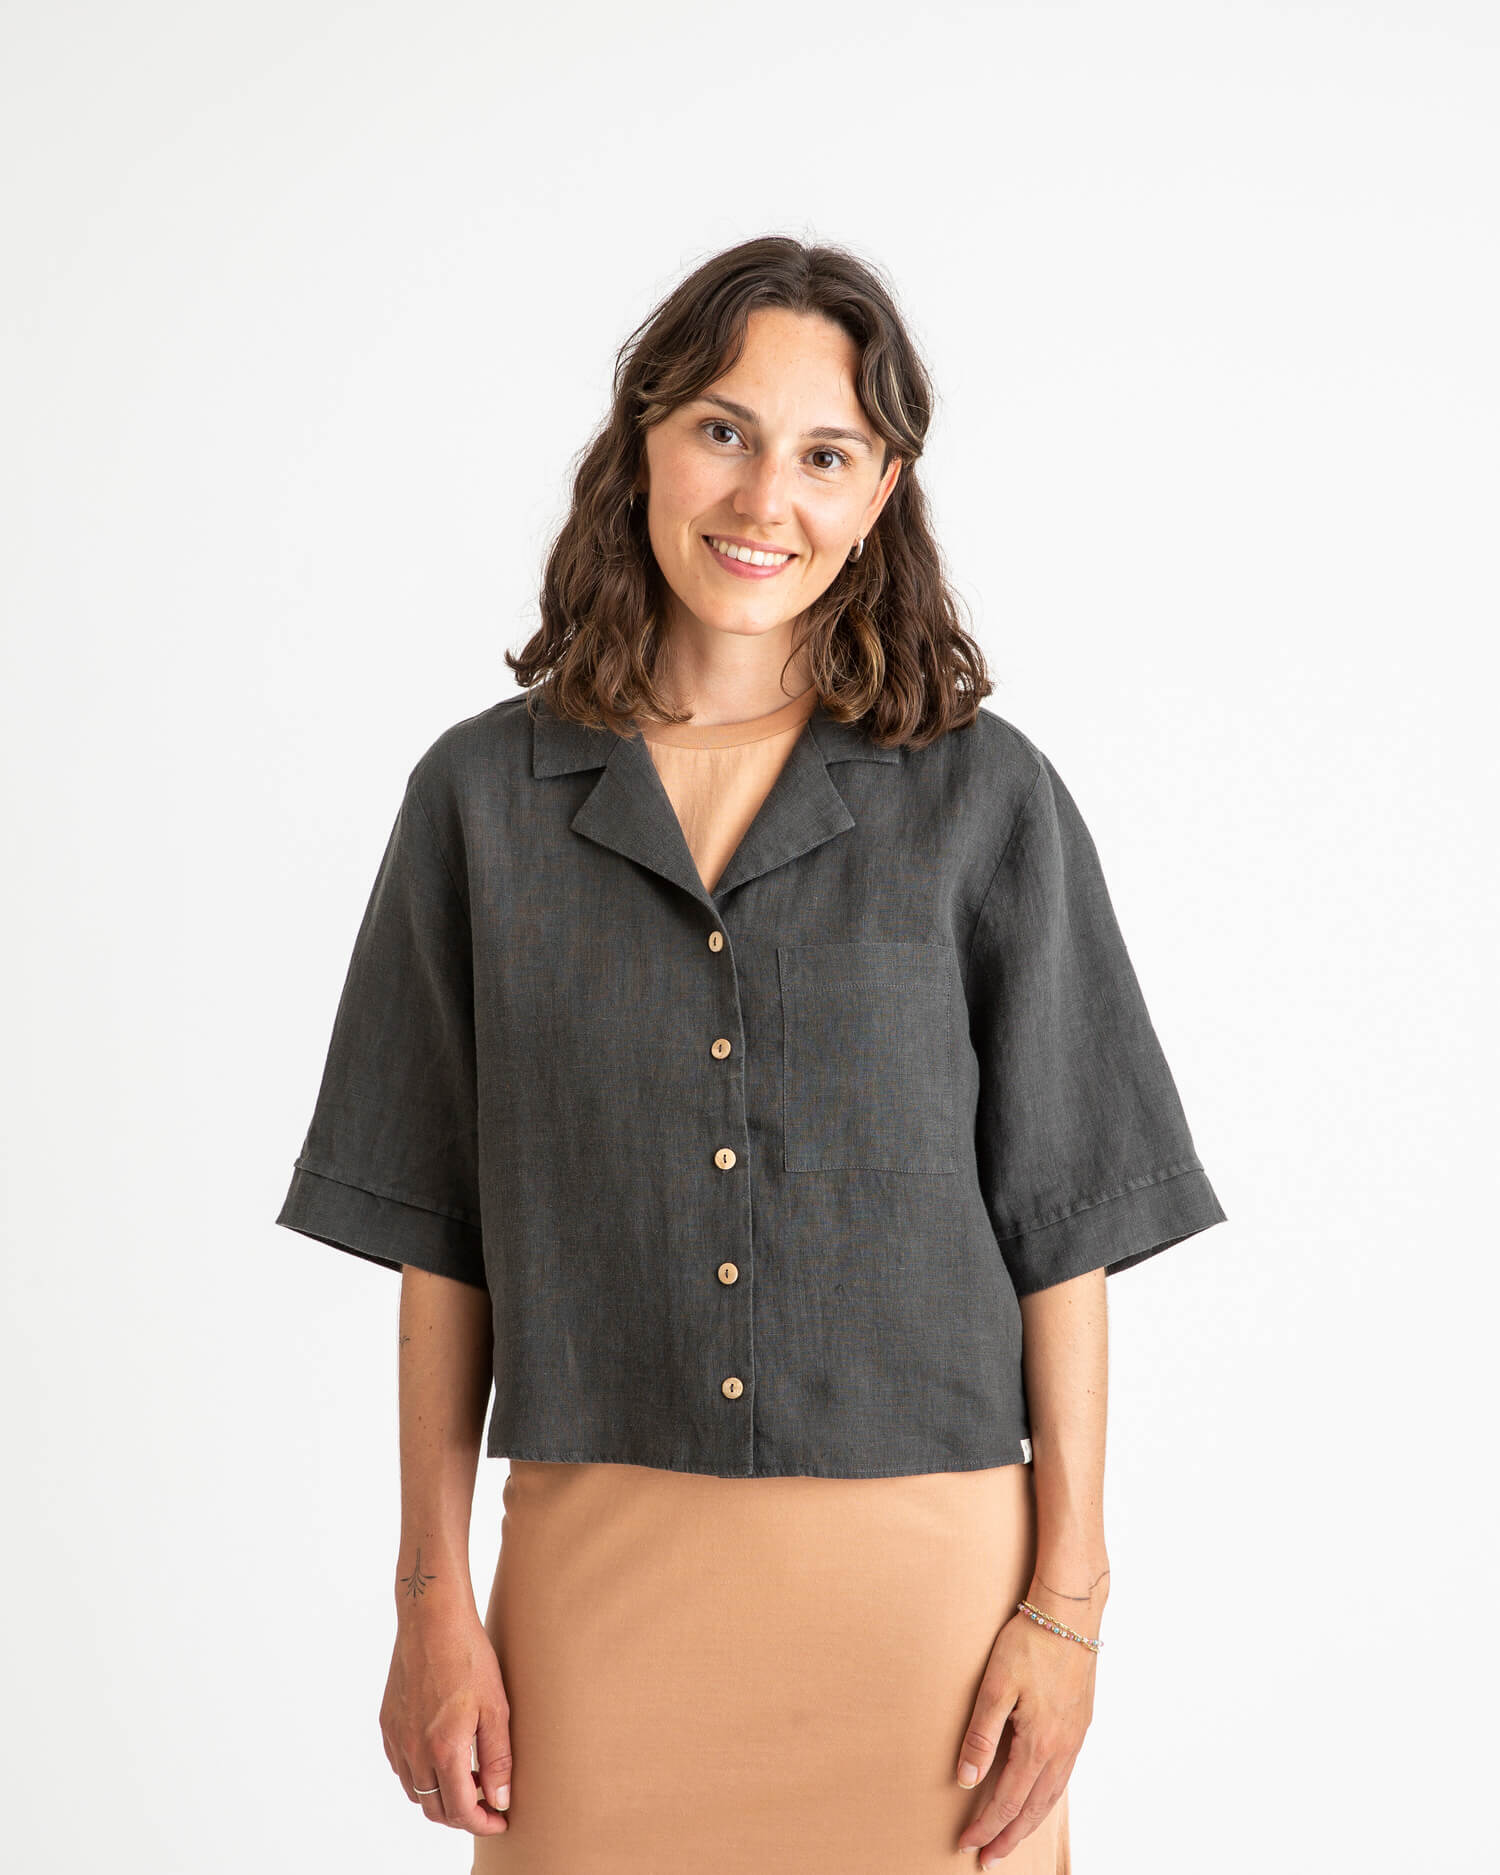 Black linen blouse from Matona